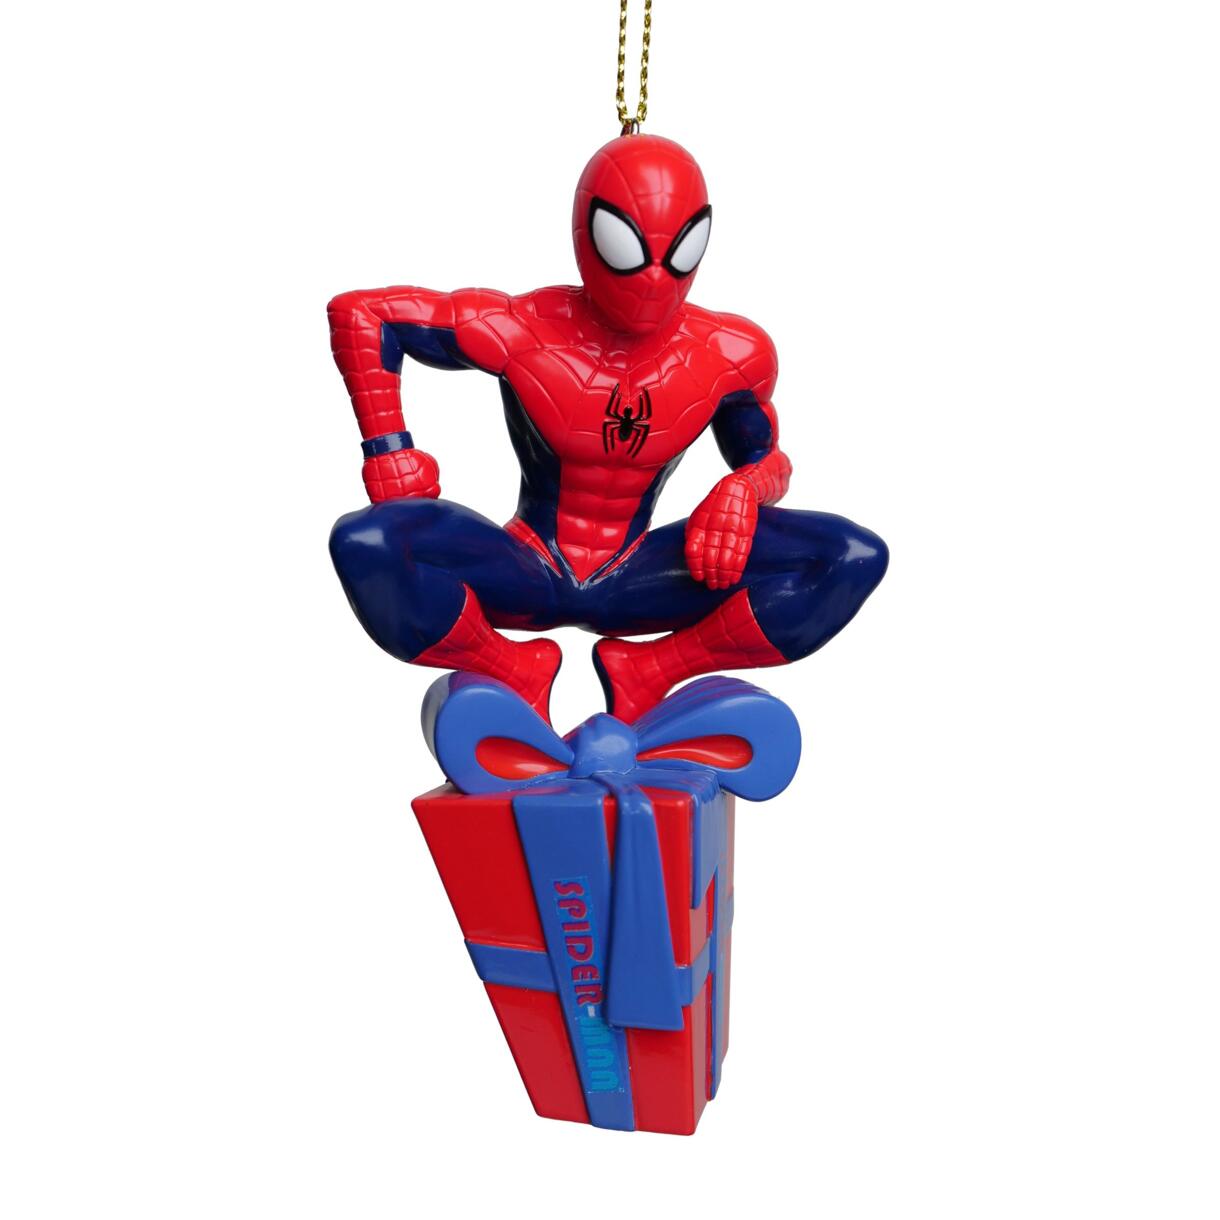 Feest hangdecoratie Disney Spiderman Rood 1